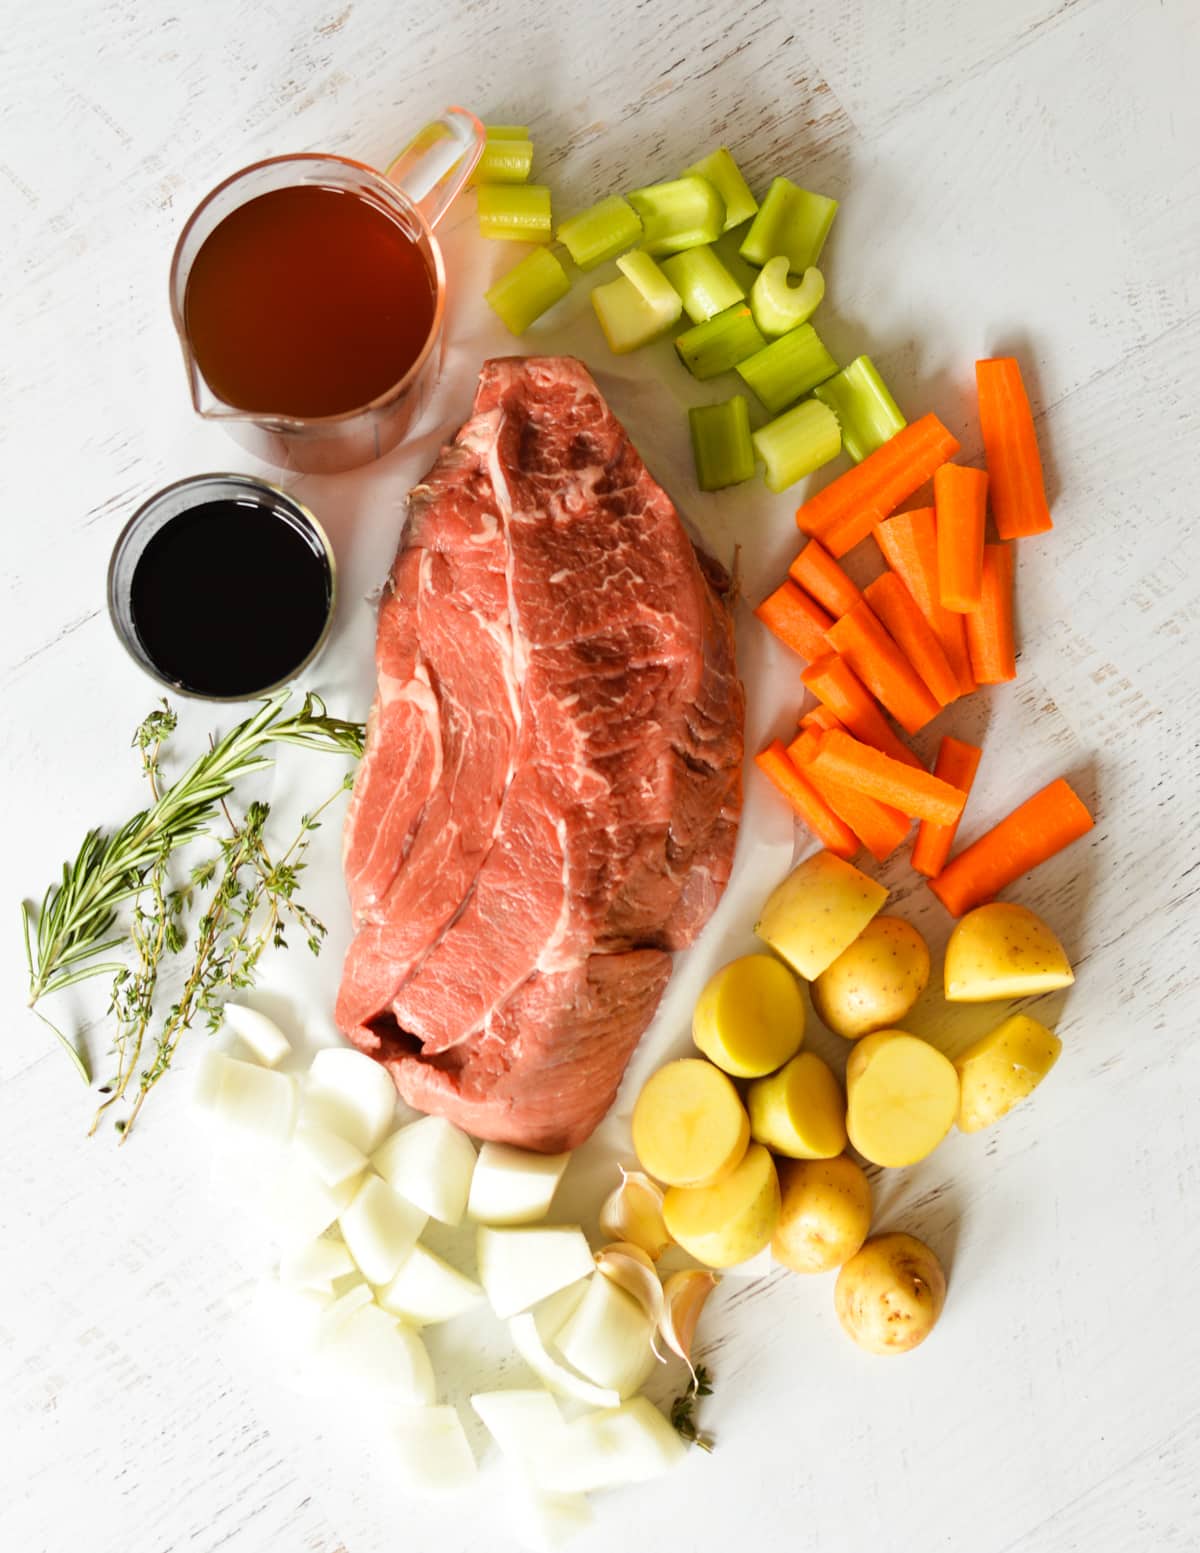 chuck roast, carrots, onions, celery, potatoes, beef broth, red wine, garlic, herbs.